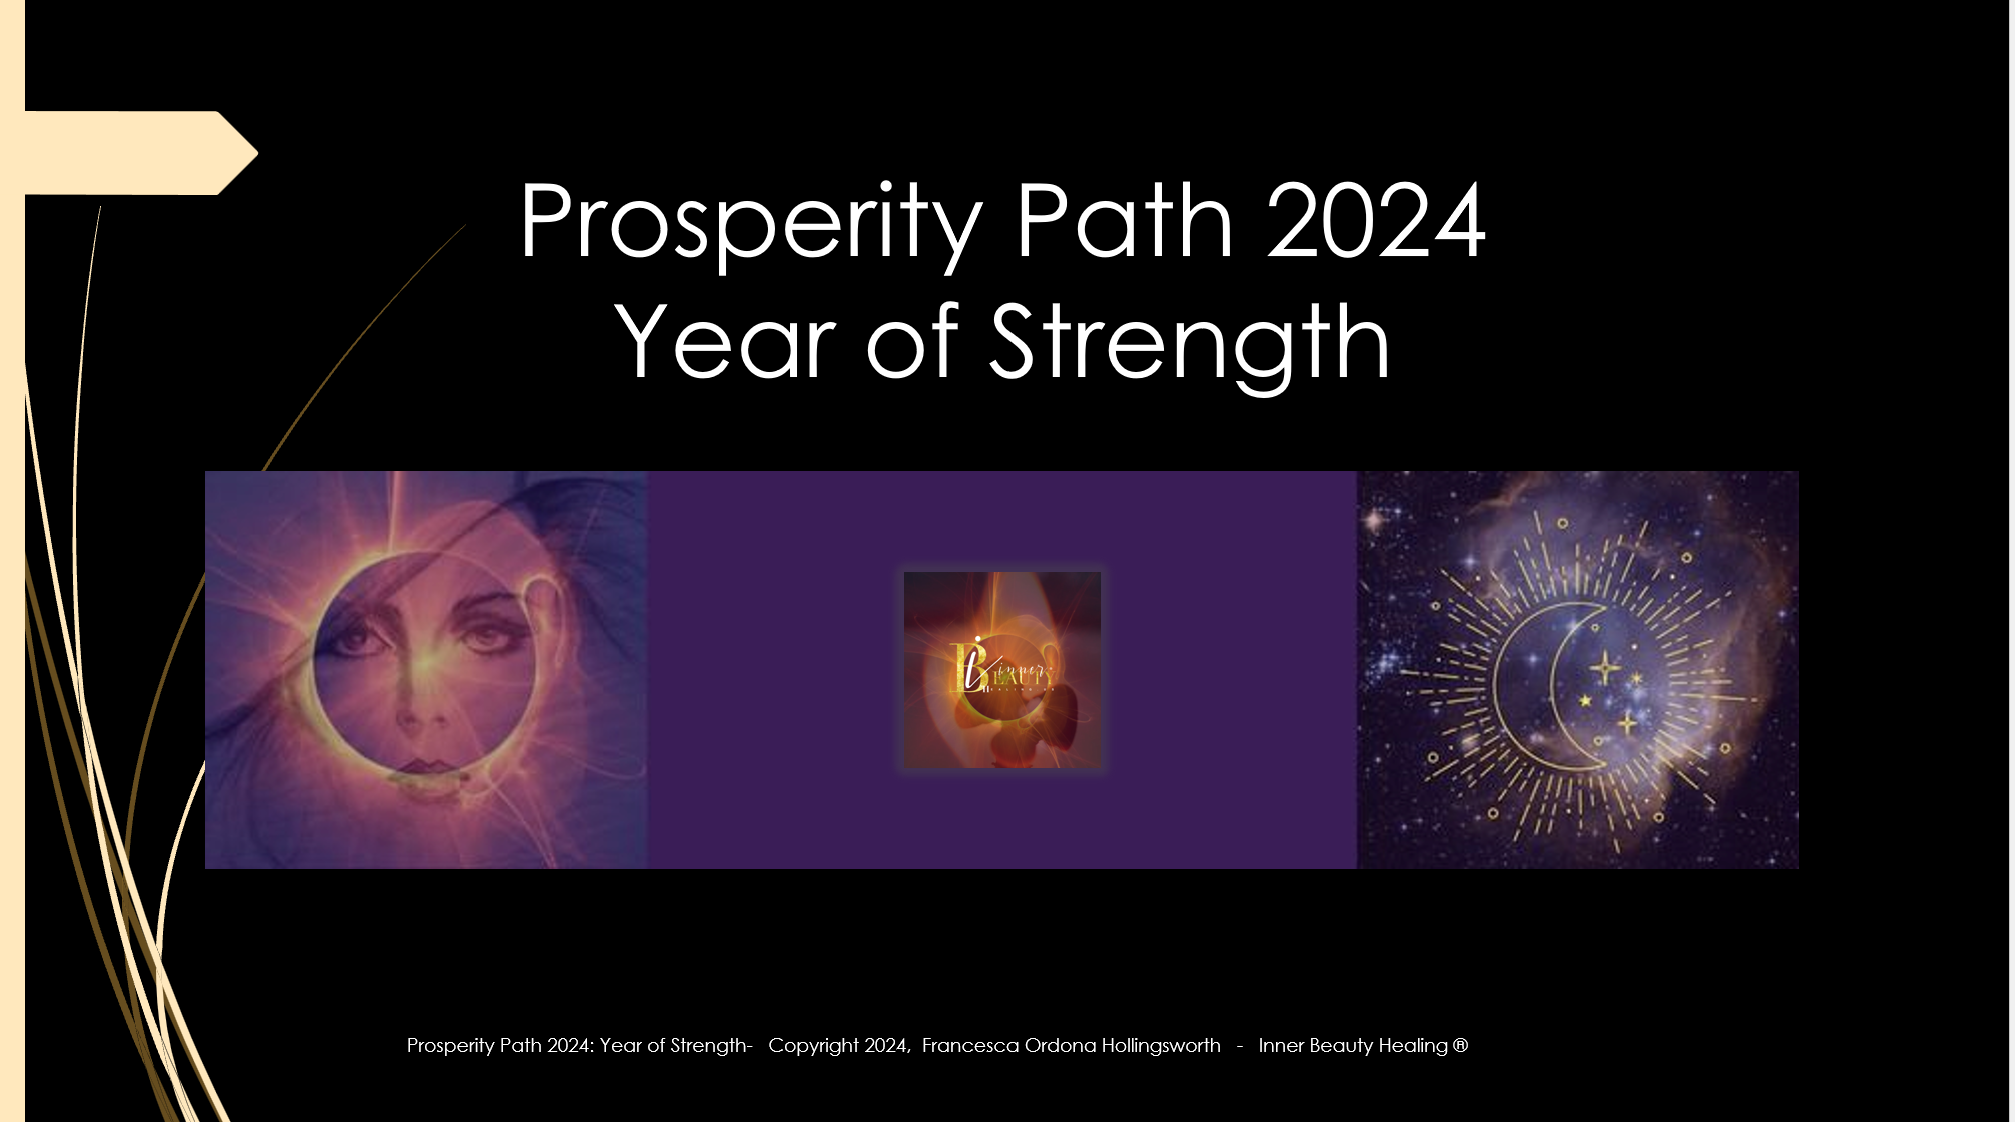 Prosperity Path 2024 - Year of Strength